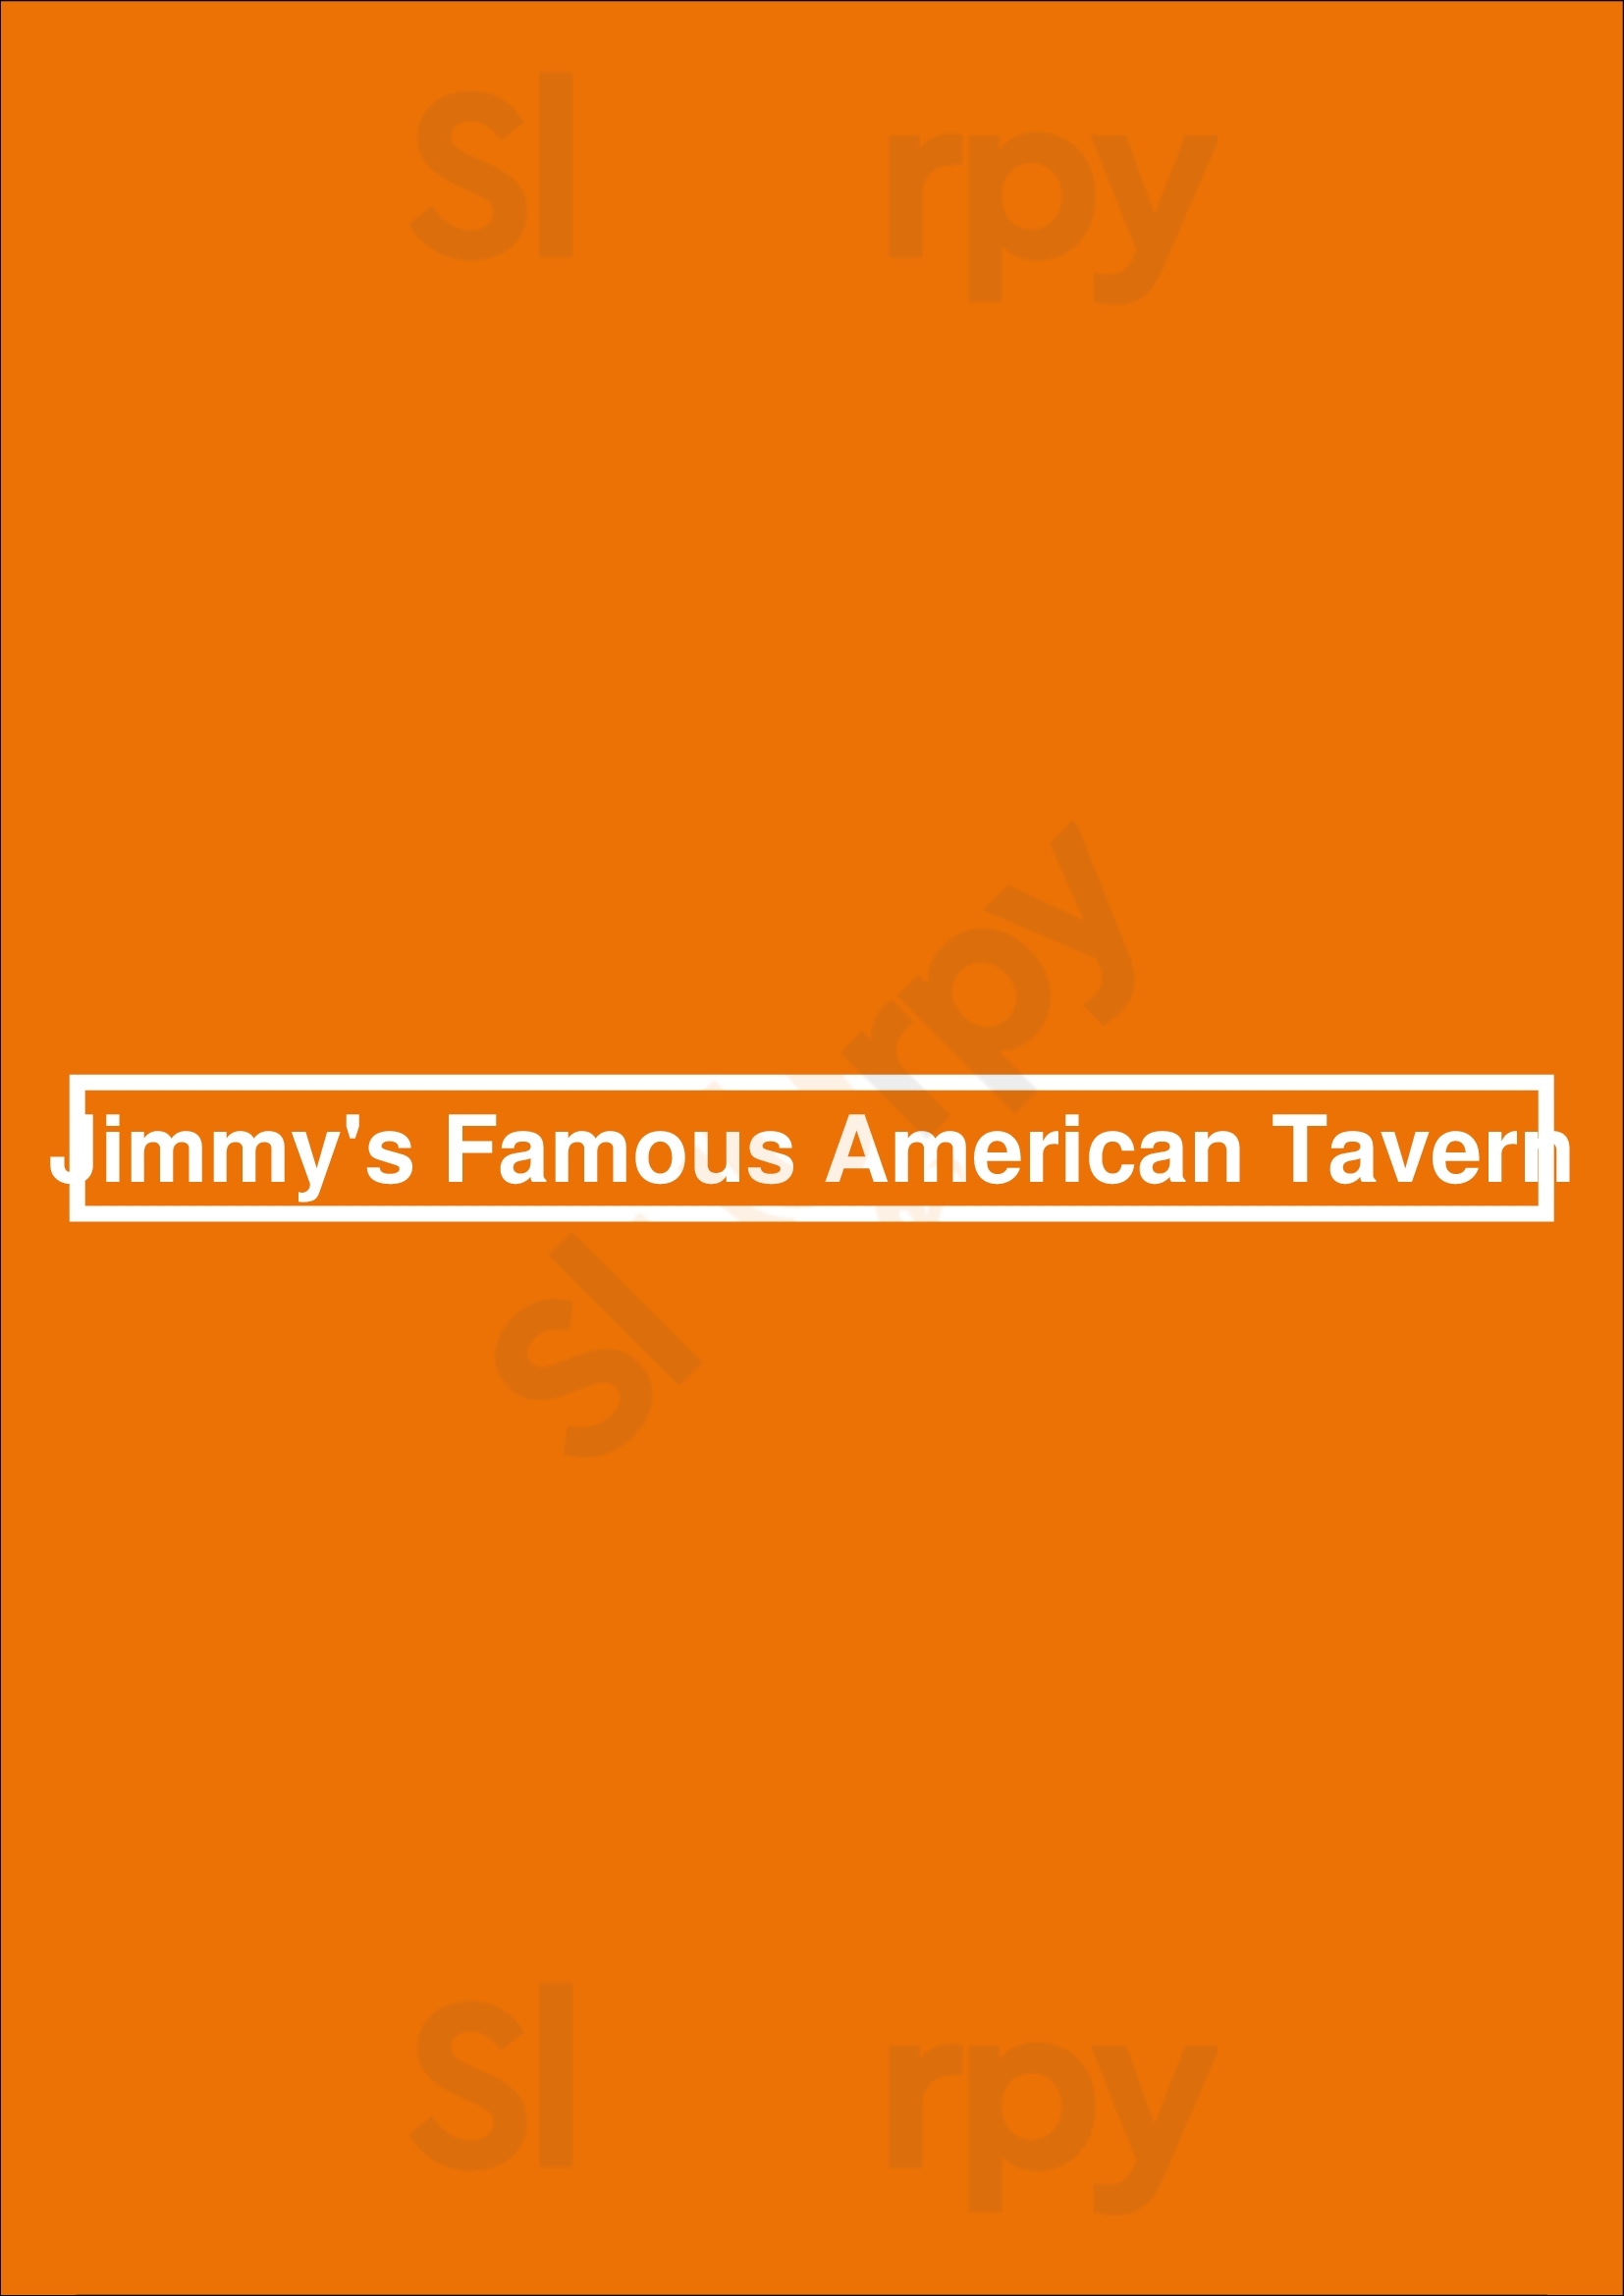 Jimmy's Famous American Tavern Los Angeles Menu - 1